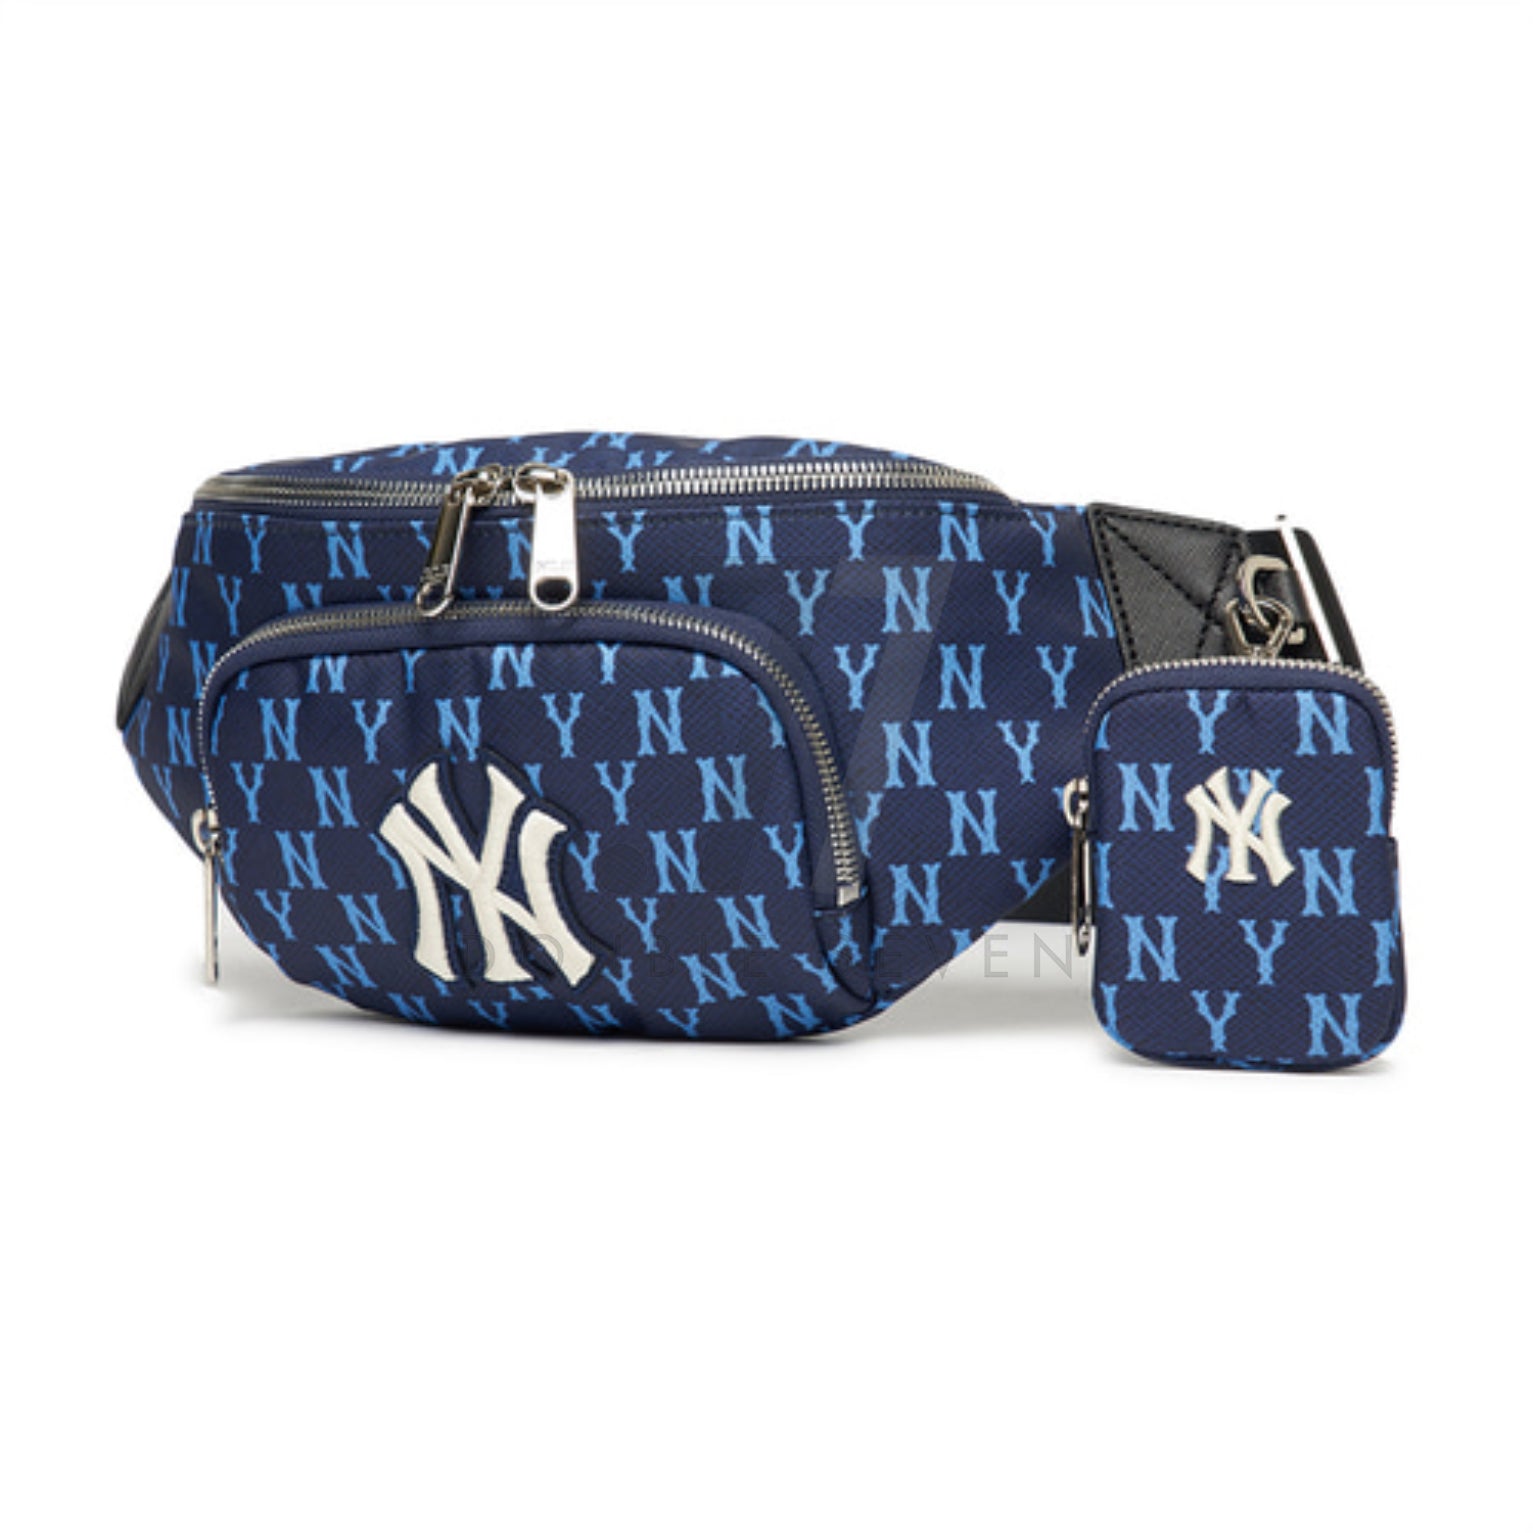 MLB Monogram "New York" Yankees Hip Sack (Ready Stock)